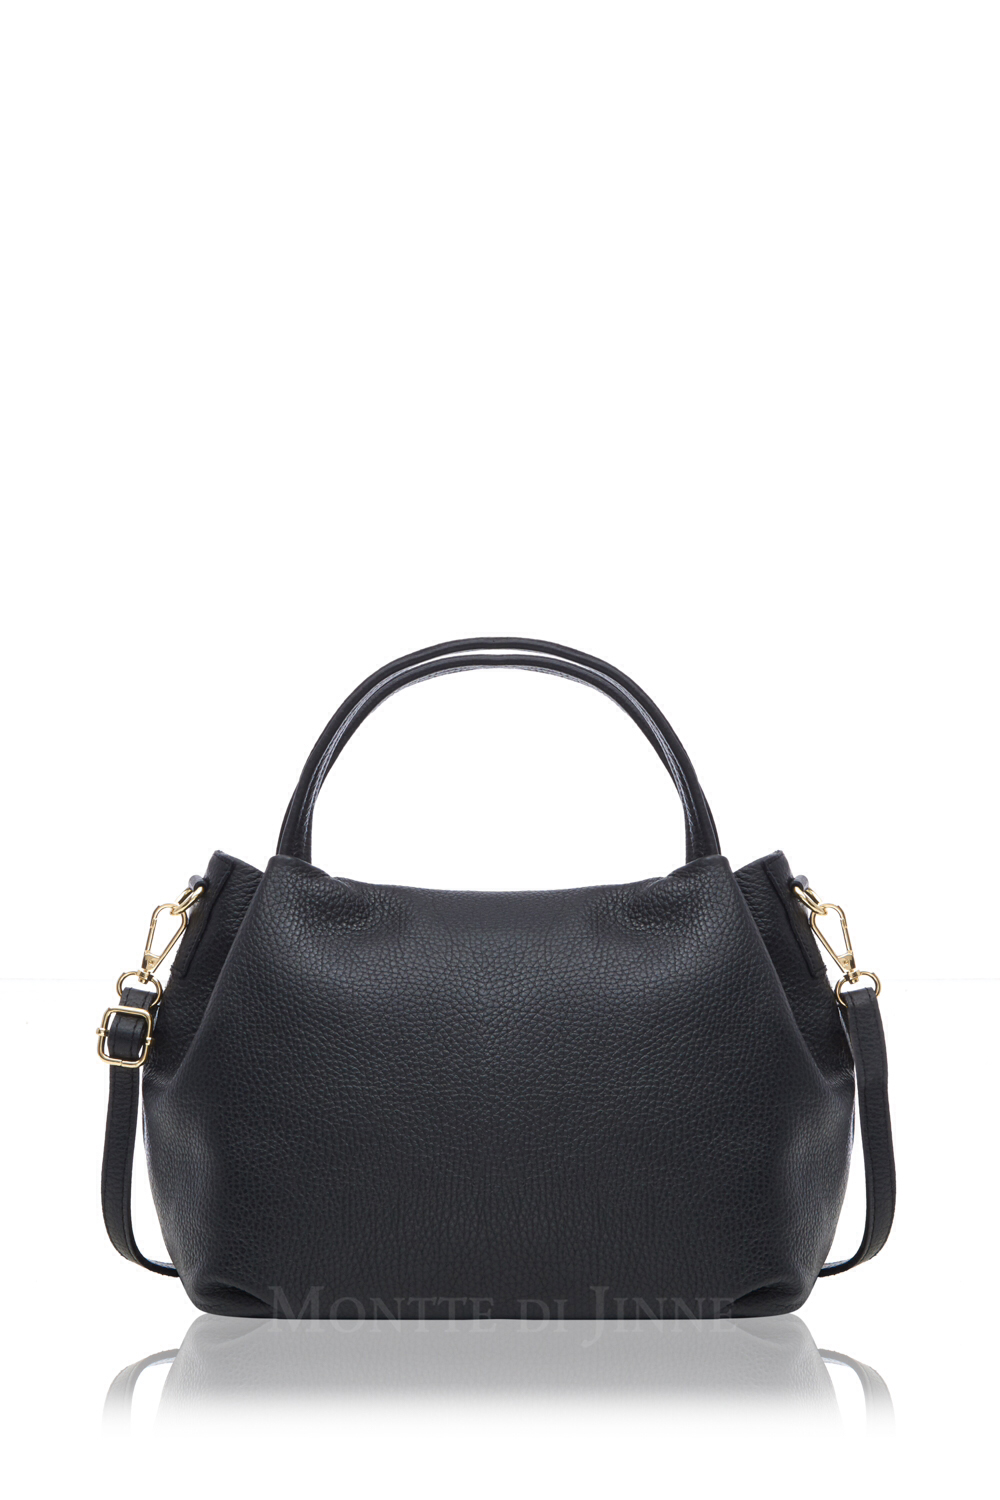 Black Textured Leather Grab Bag 